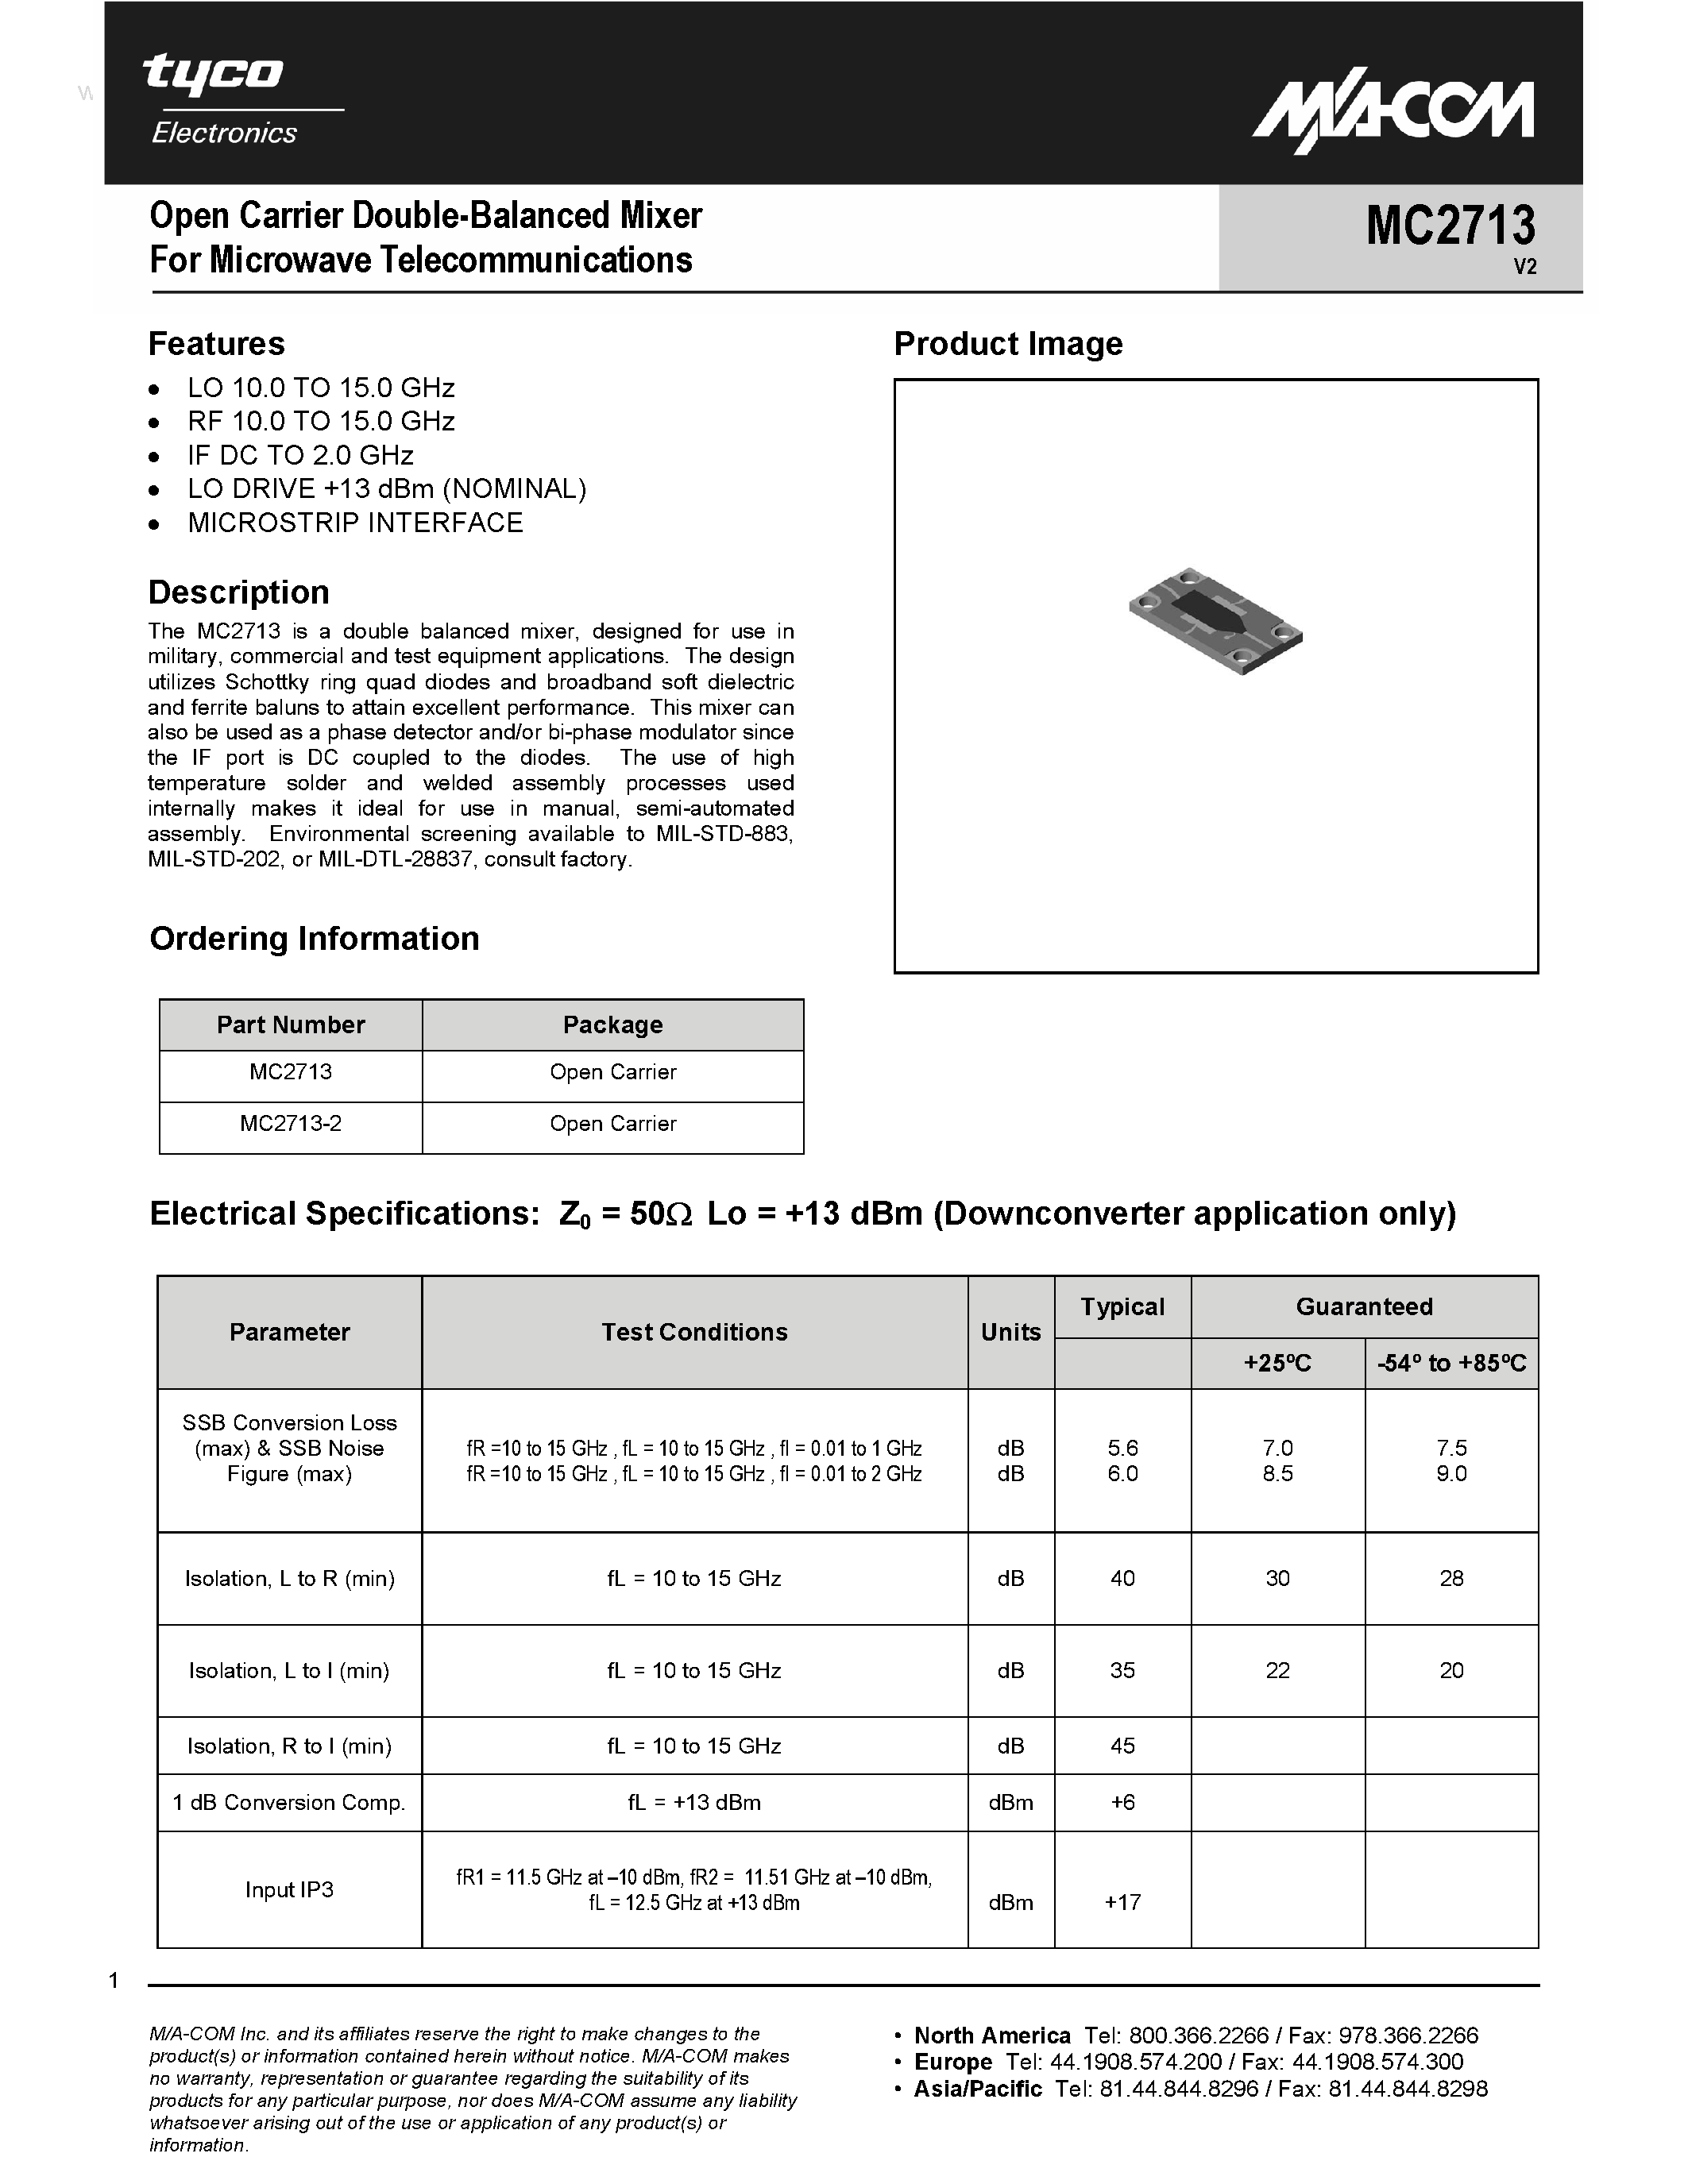 Datasheet MC2713 - Open Carrier Double-Balanced Mixer page 1